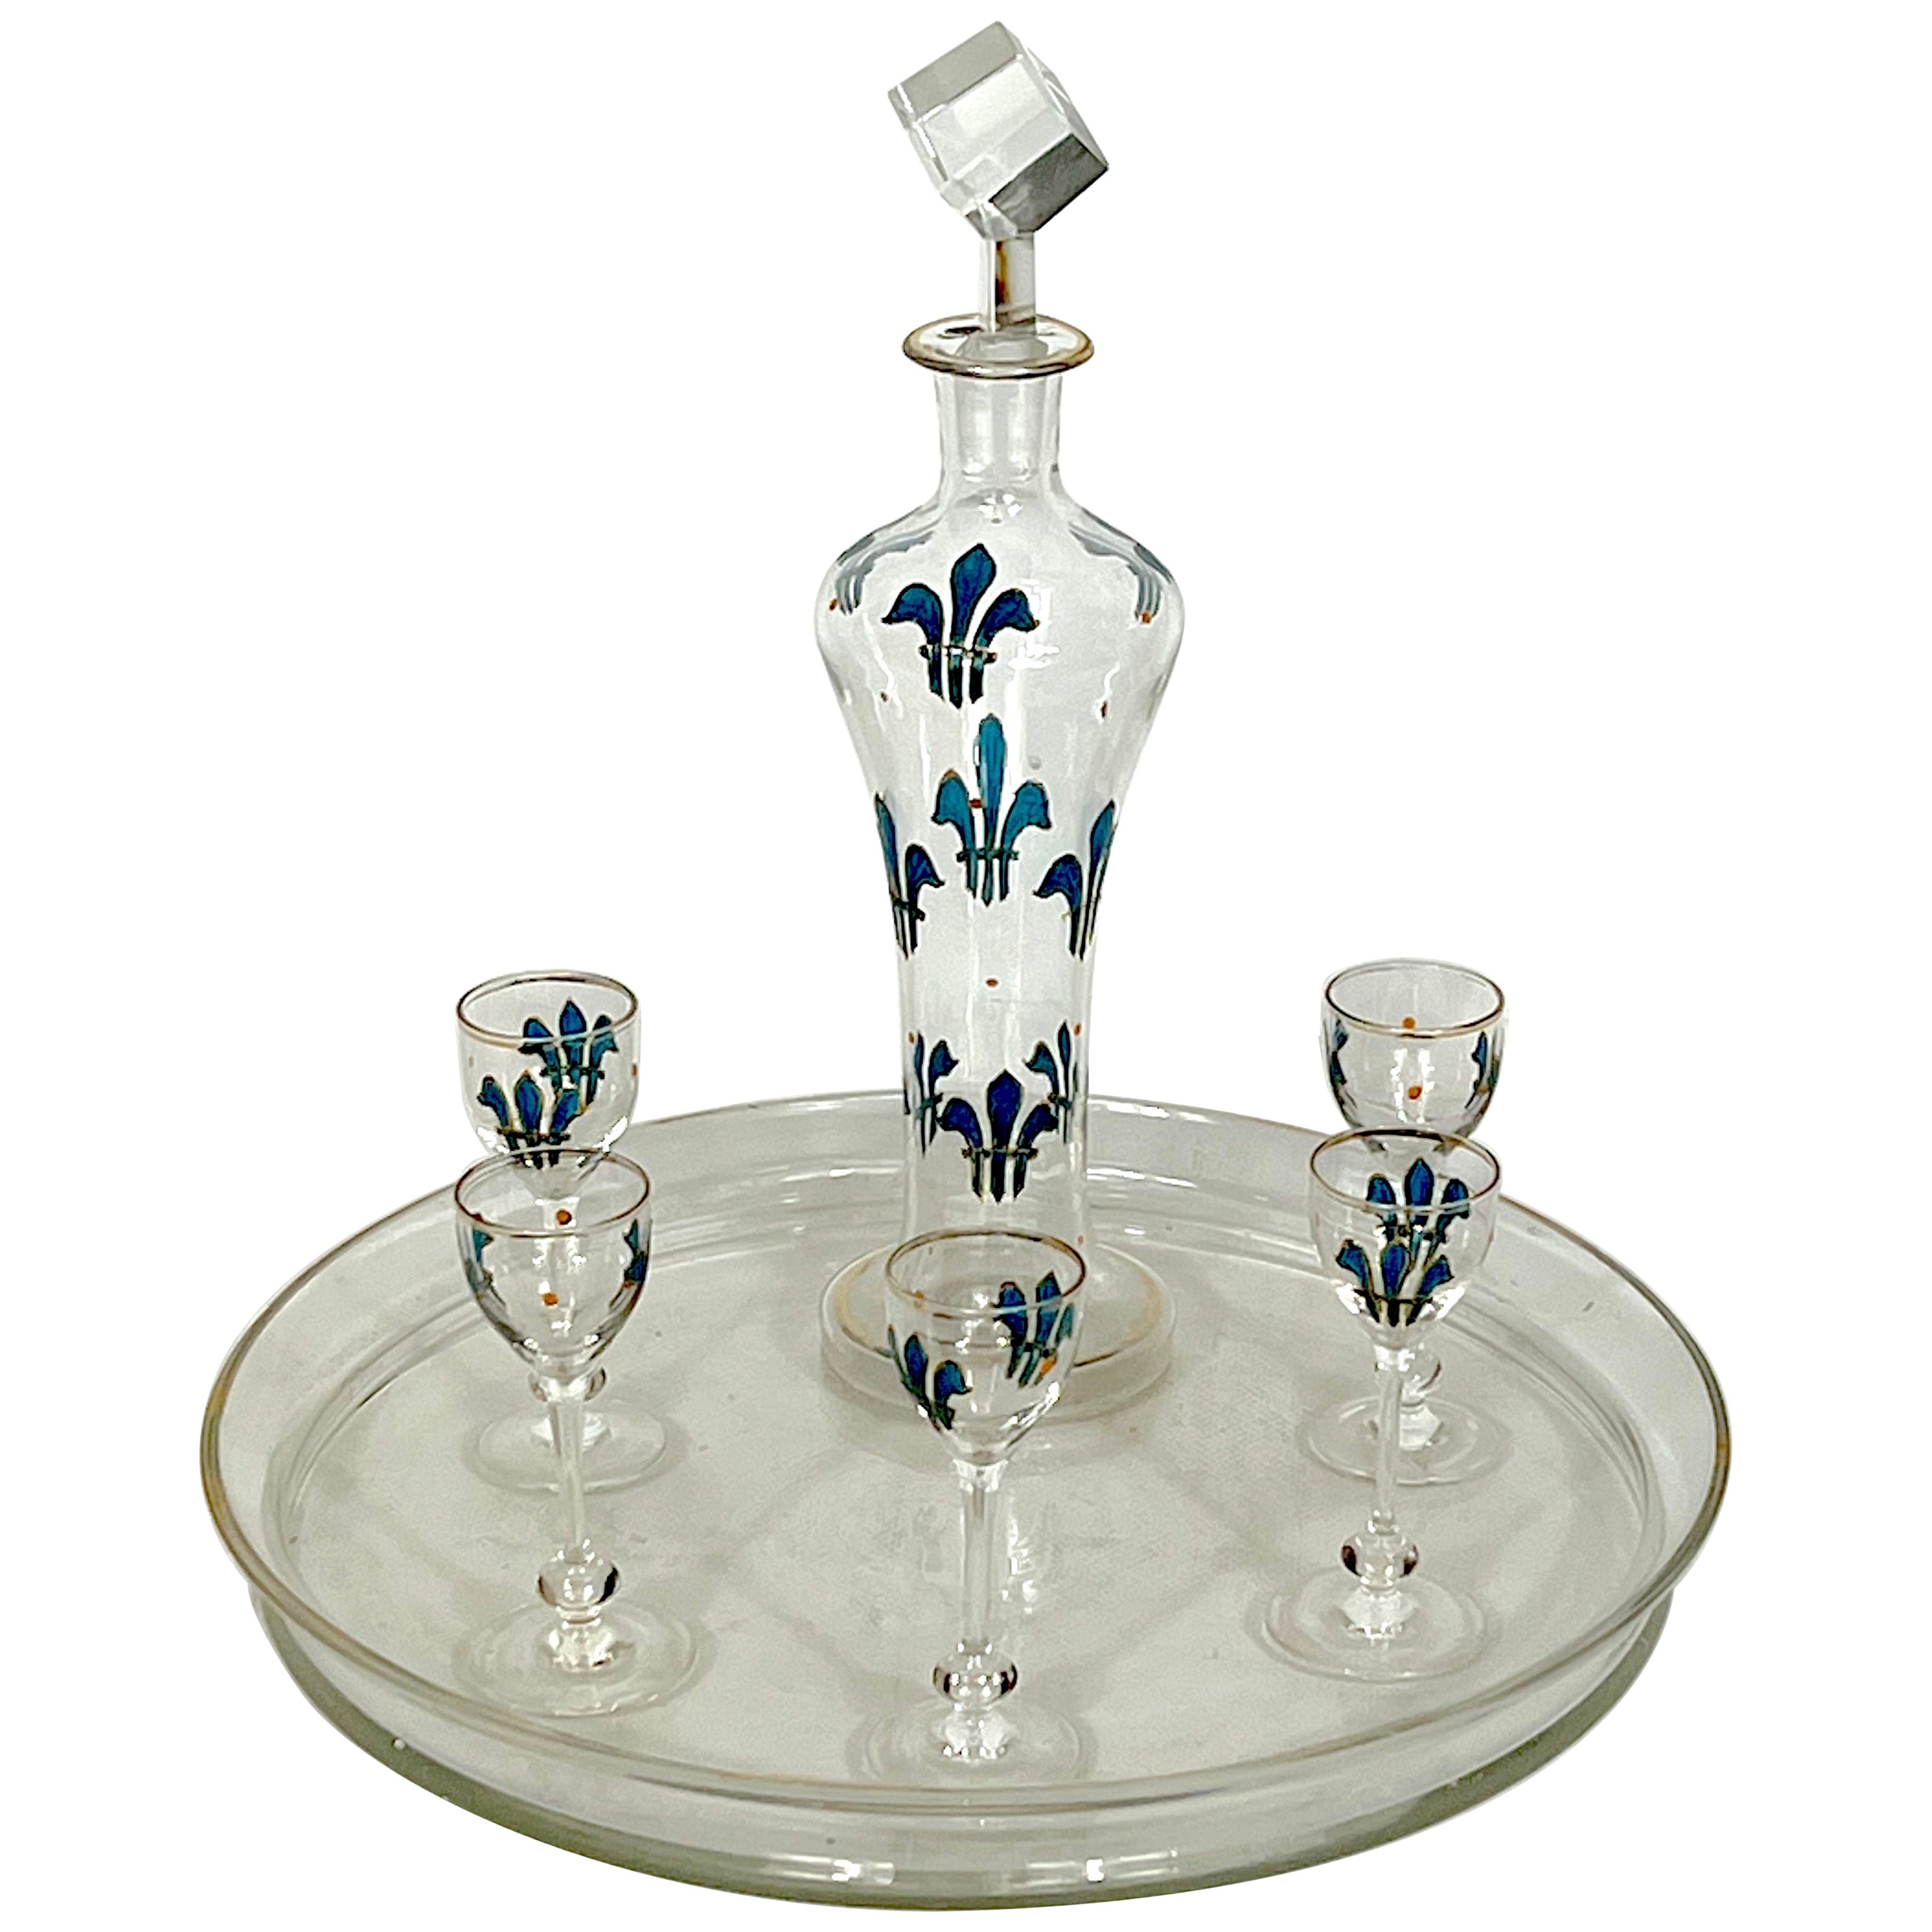 Italian Art Nouveau Glass Liquor Set from 1920s For Sale